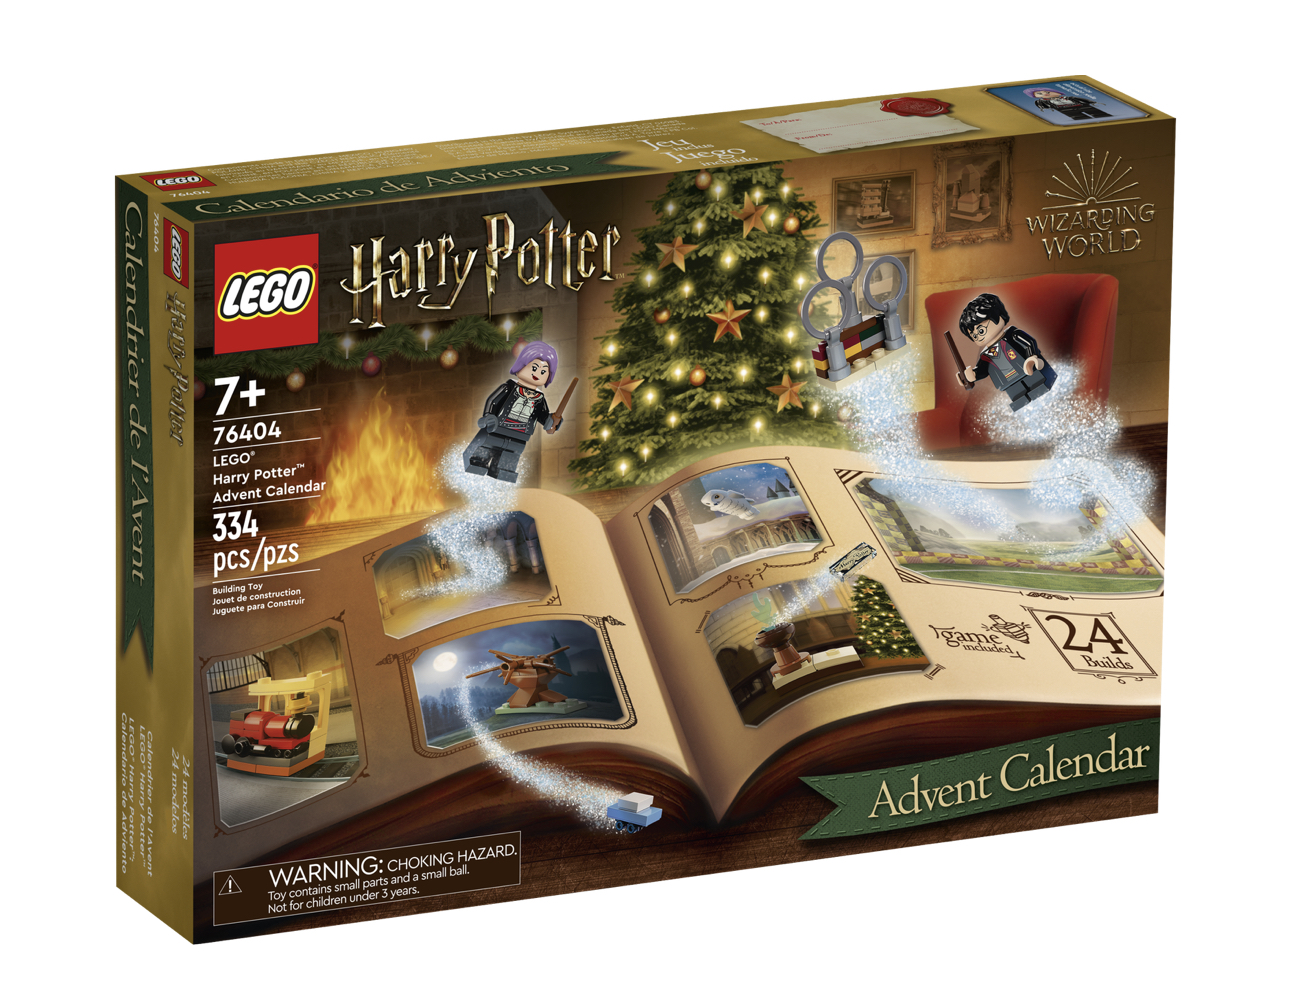 Lego Harry Potter Advent Calendar - Best Advent Calendar for Men